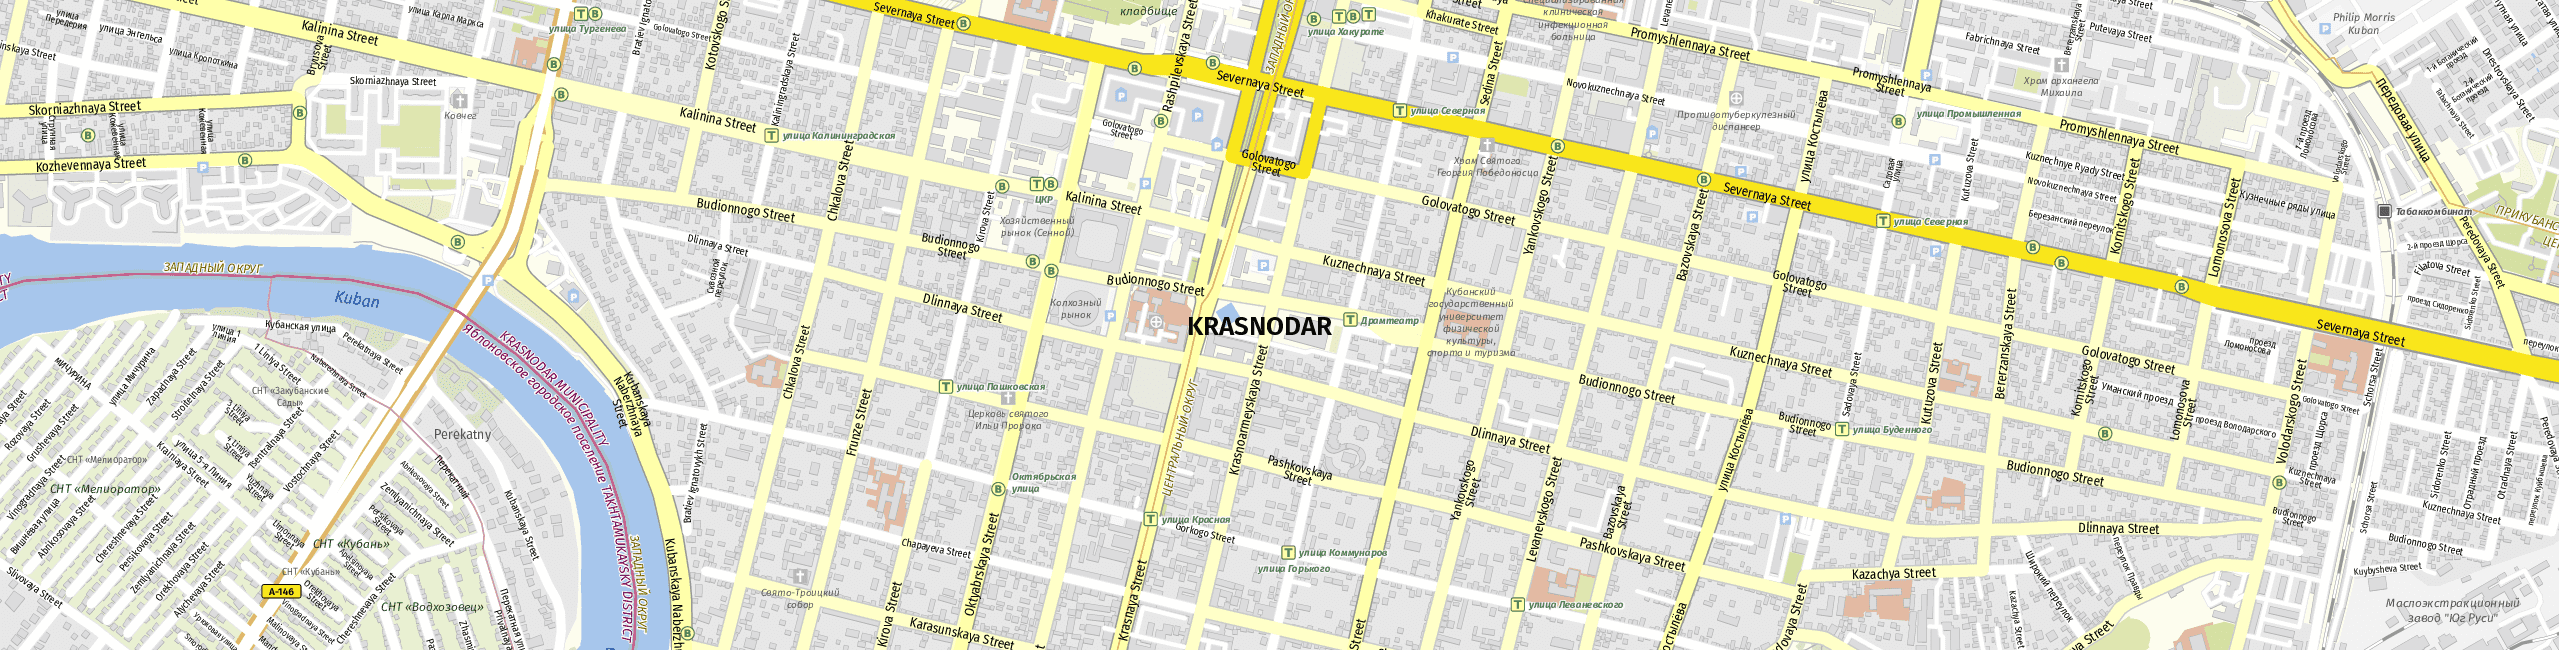 Stadtplan Krasnodar zum Downloaden.